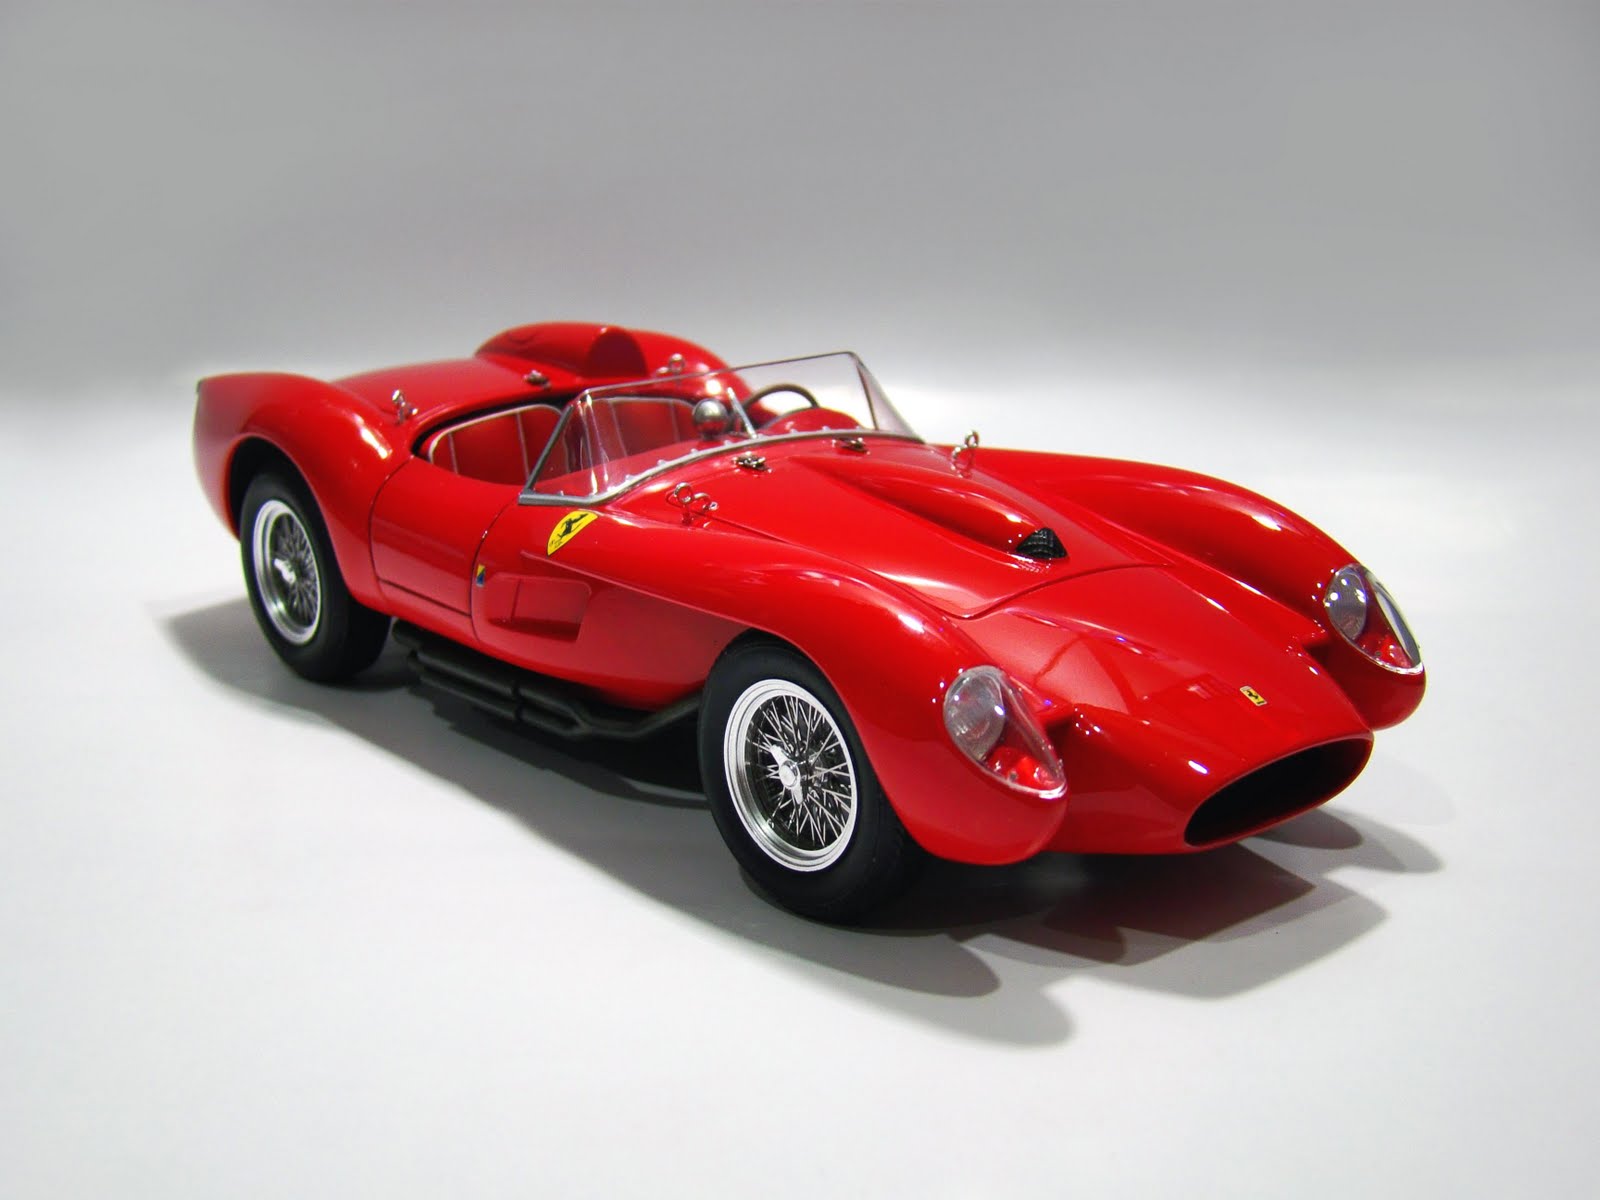 Ferrari 250 Testa Rossa 1957 1958 Photo Gallery 